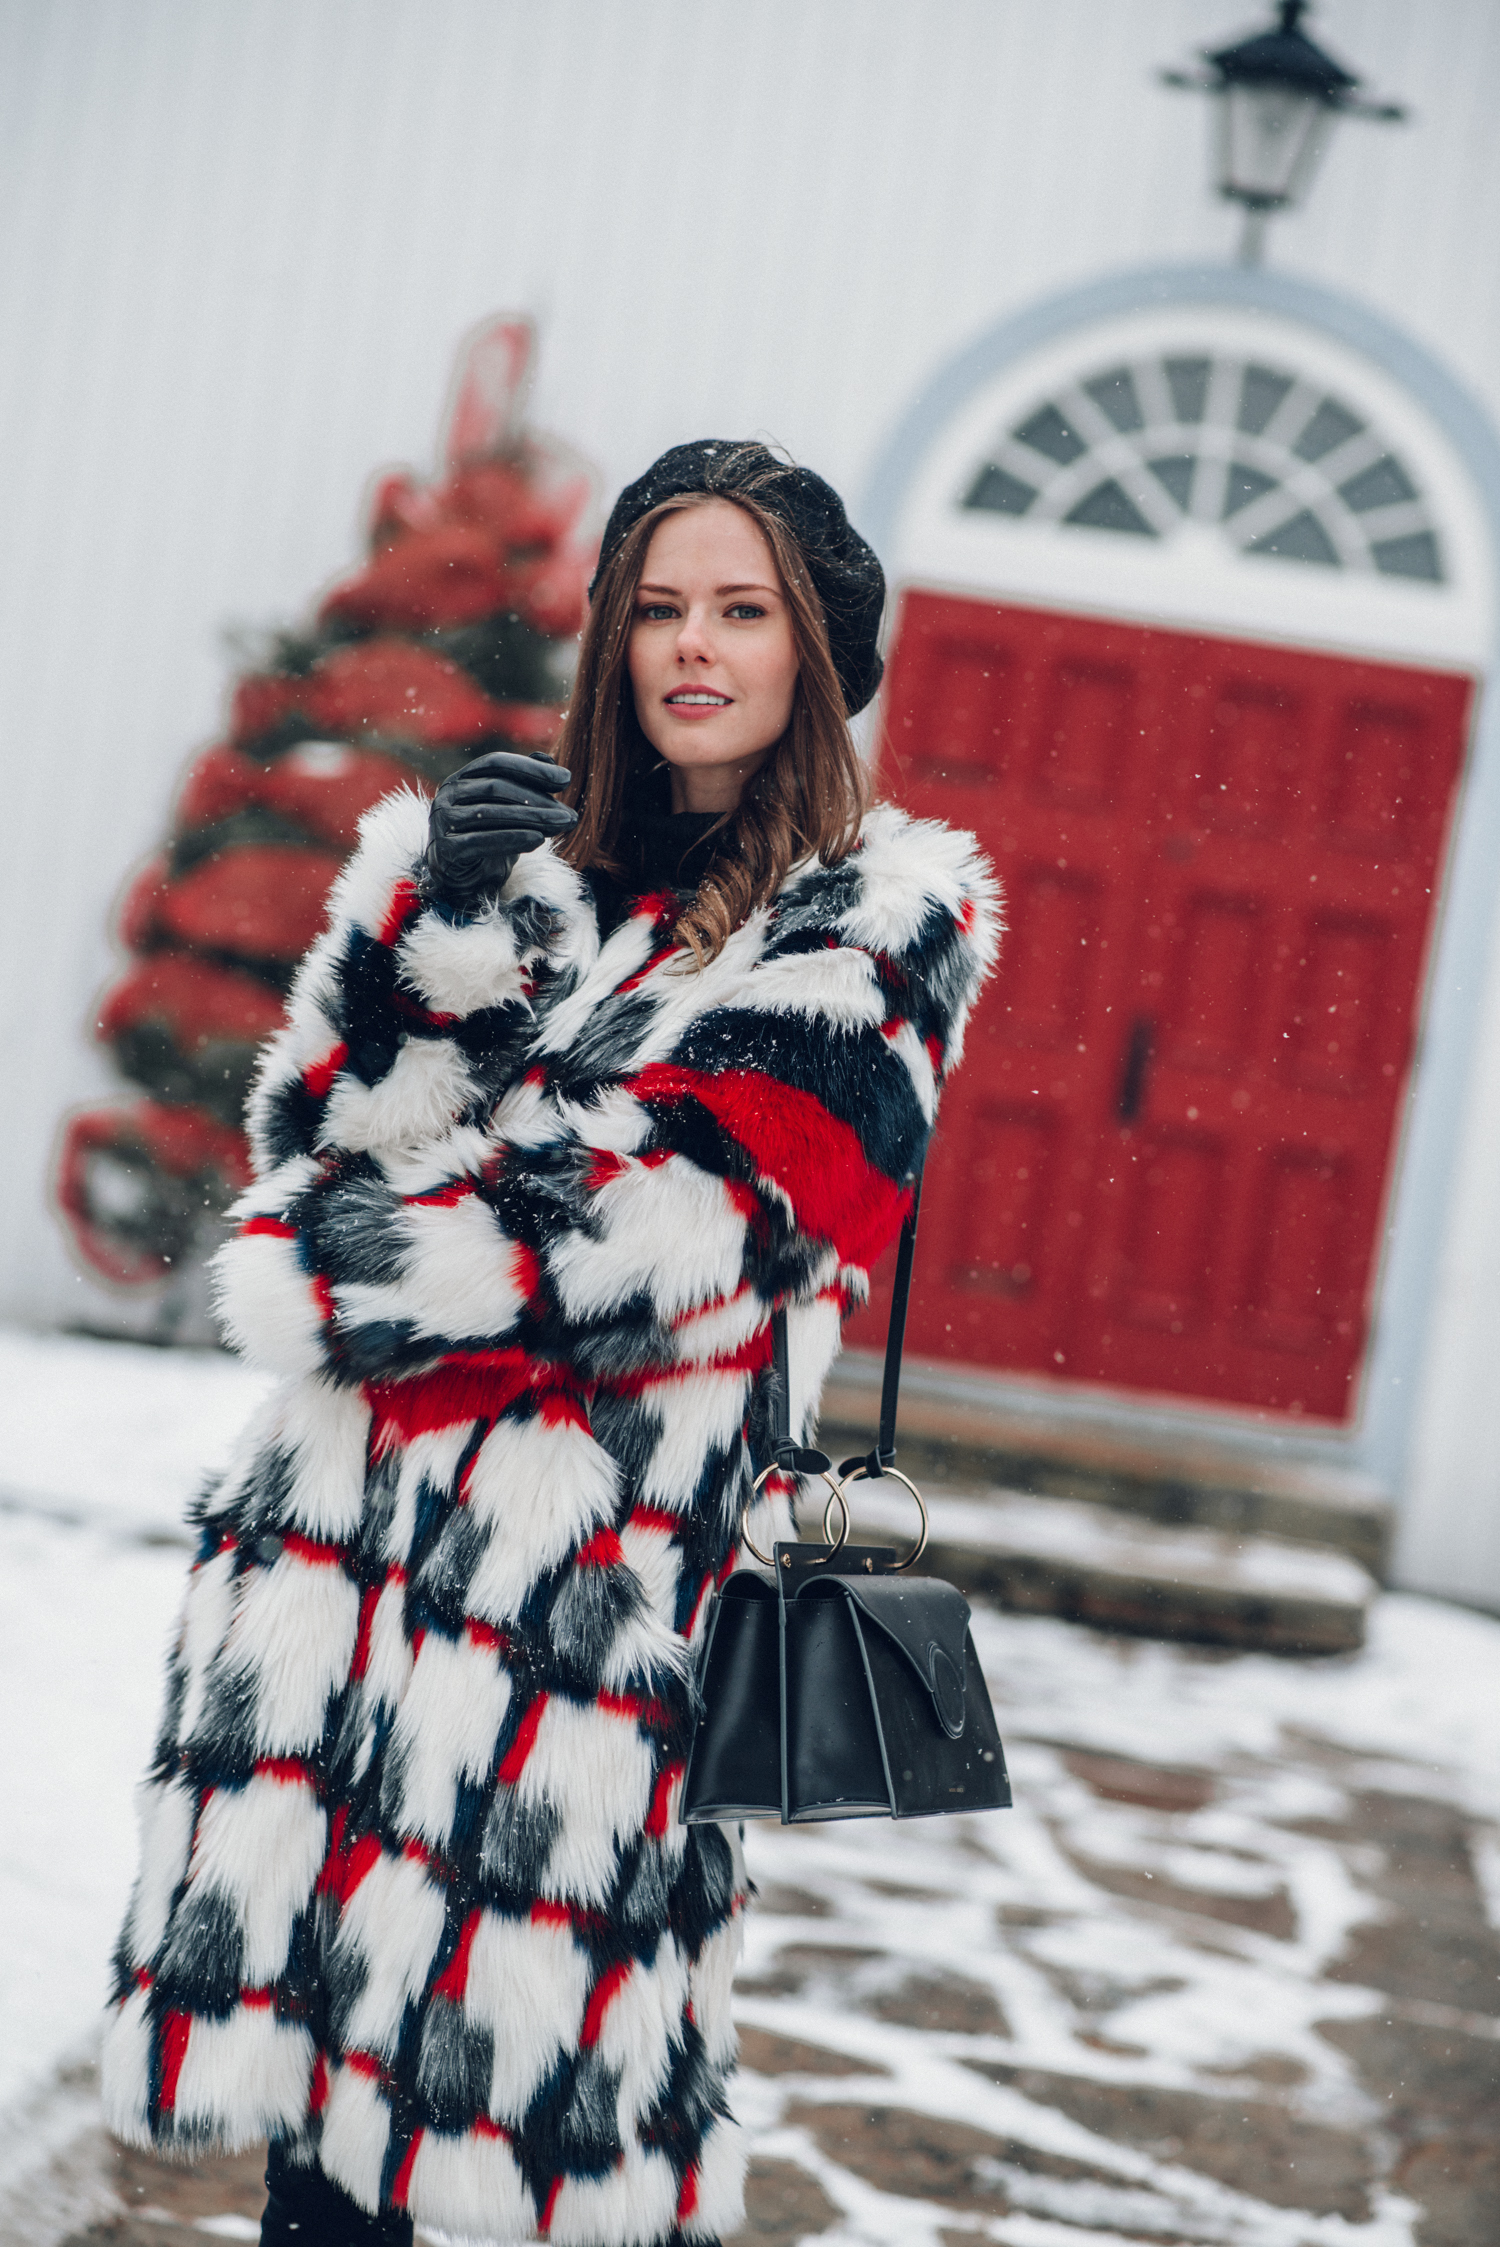 Alyssa Campanella of The A List blog shares glamorous faux fur coats wearing Urbancode London faux fur coat